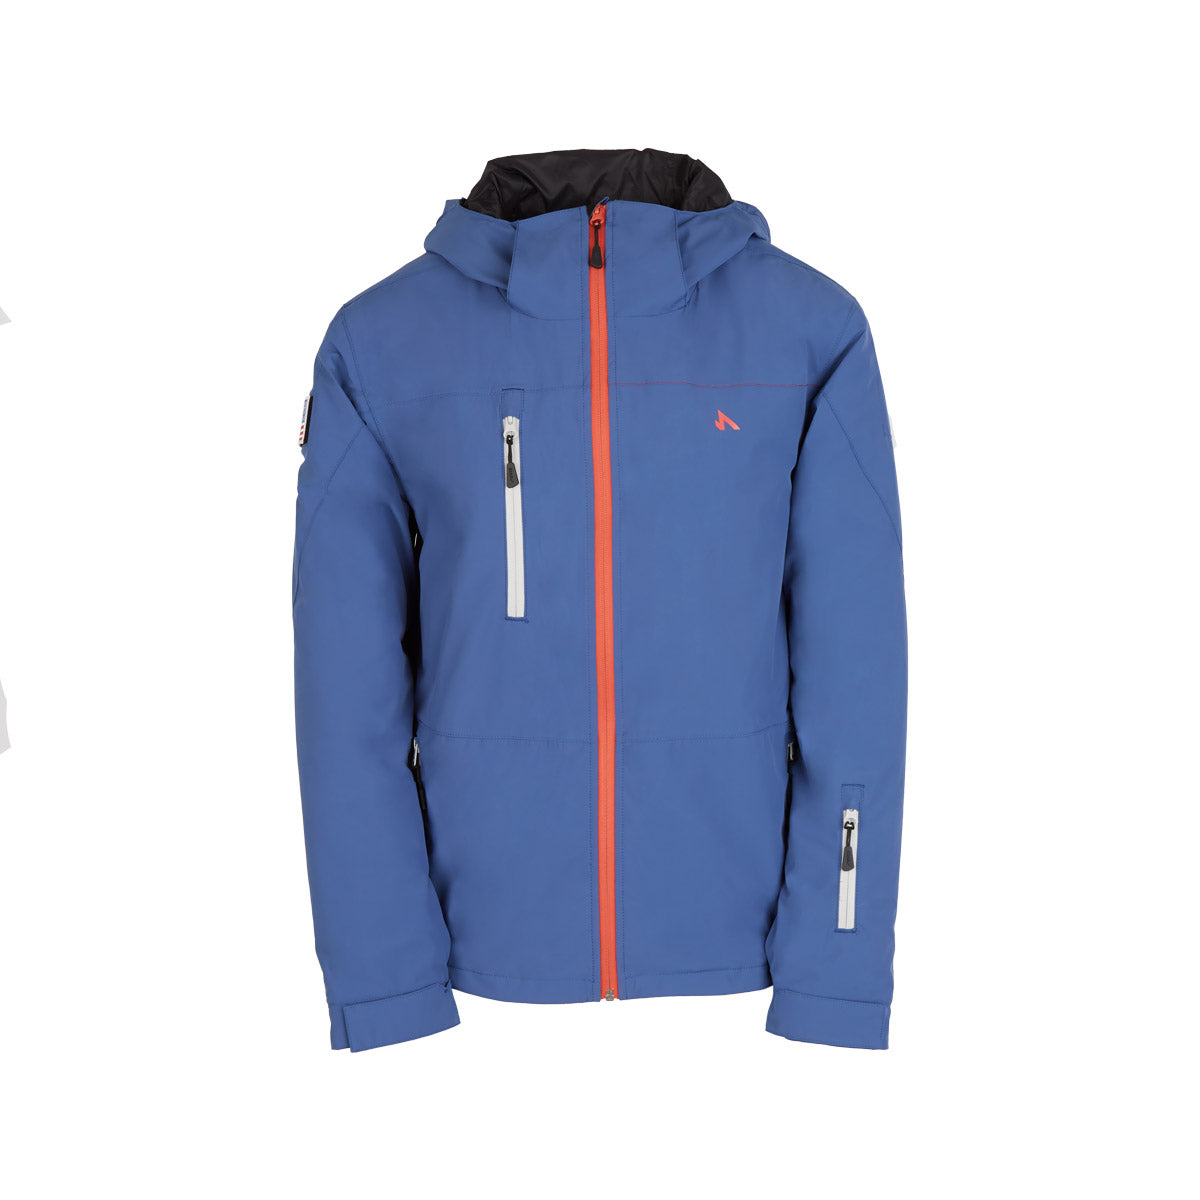 The Protego Ski Jacket in Blue